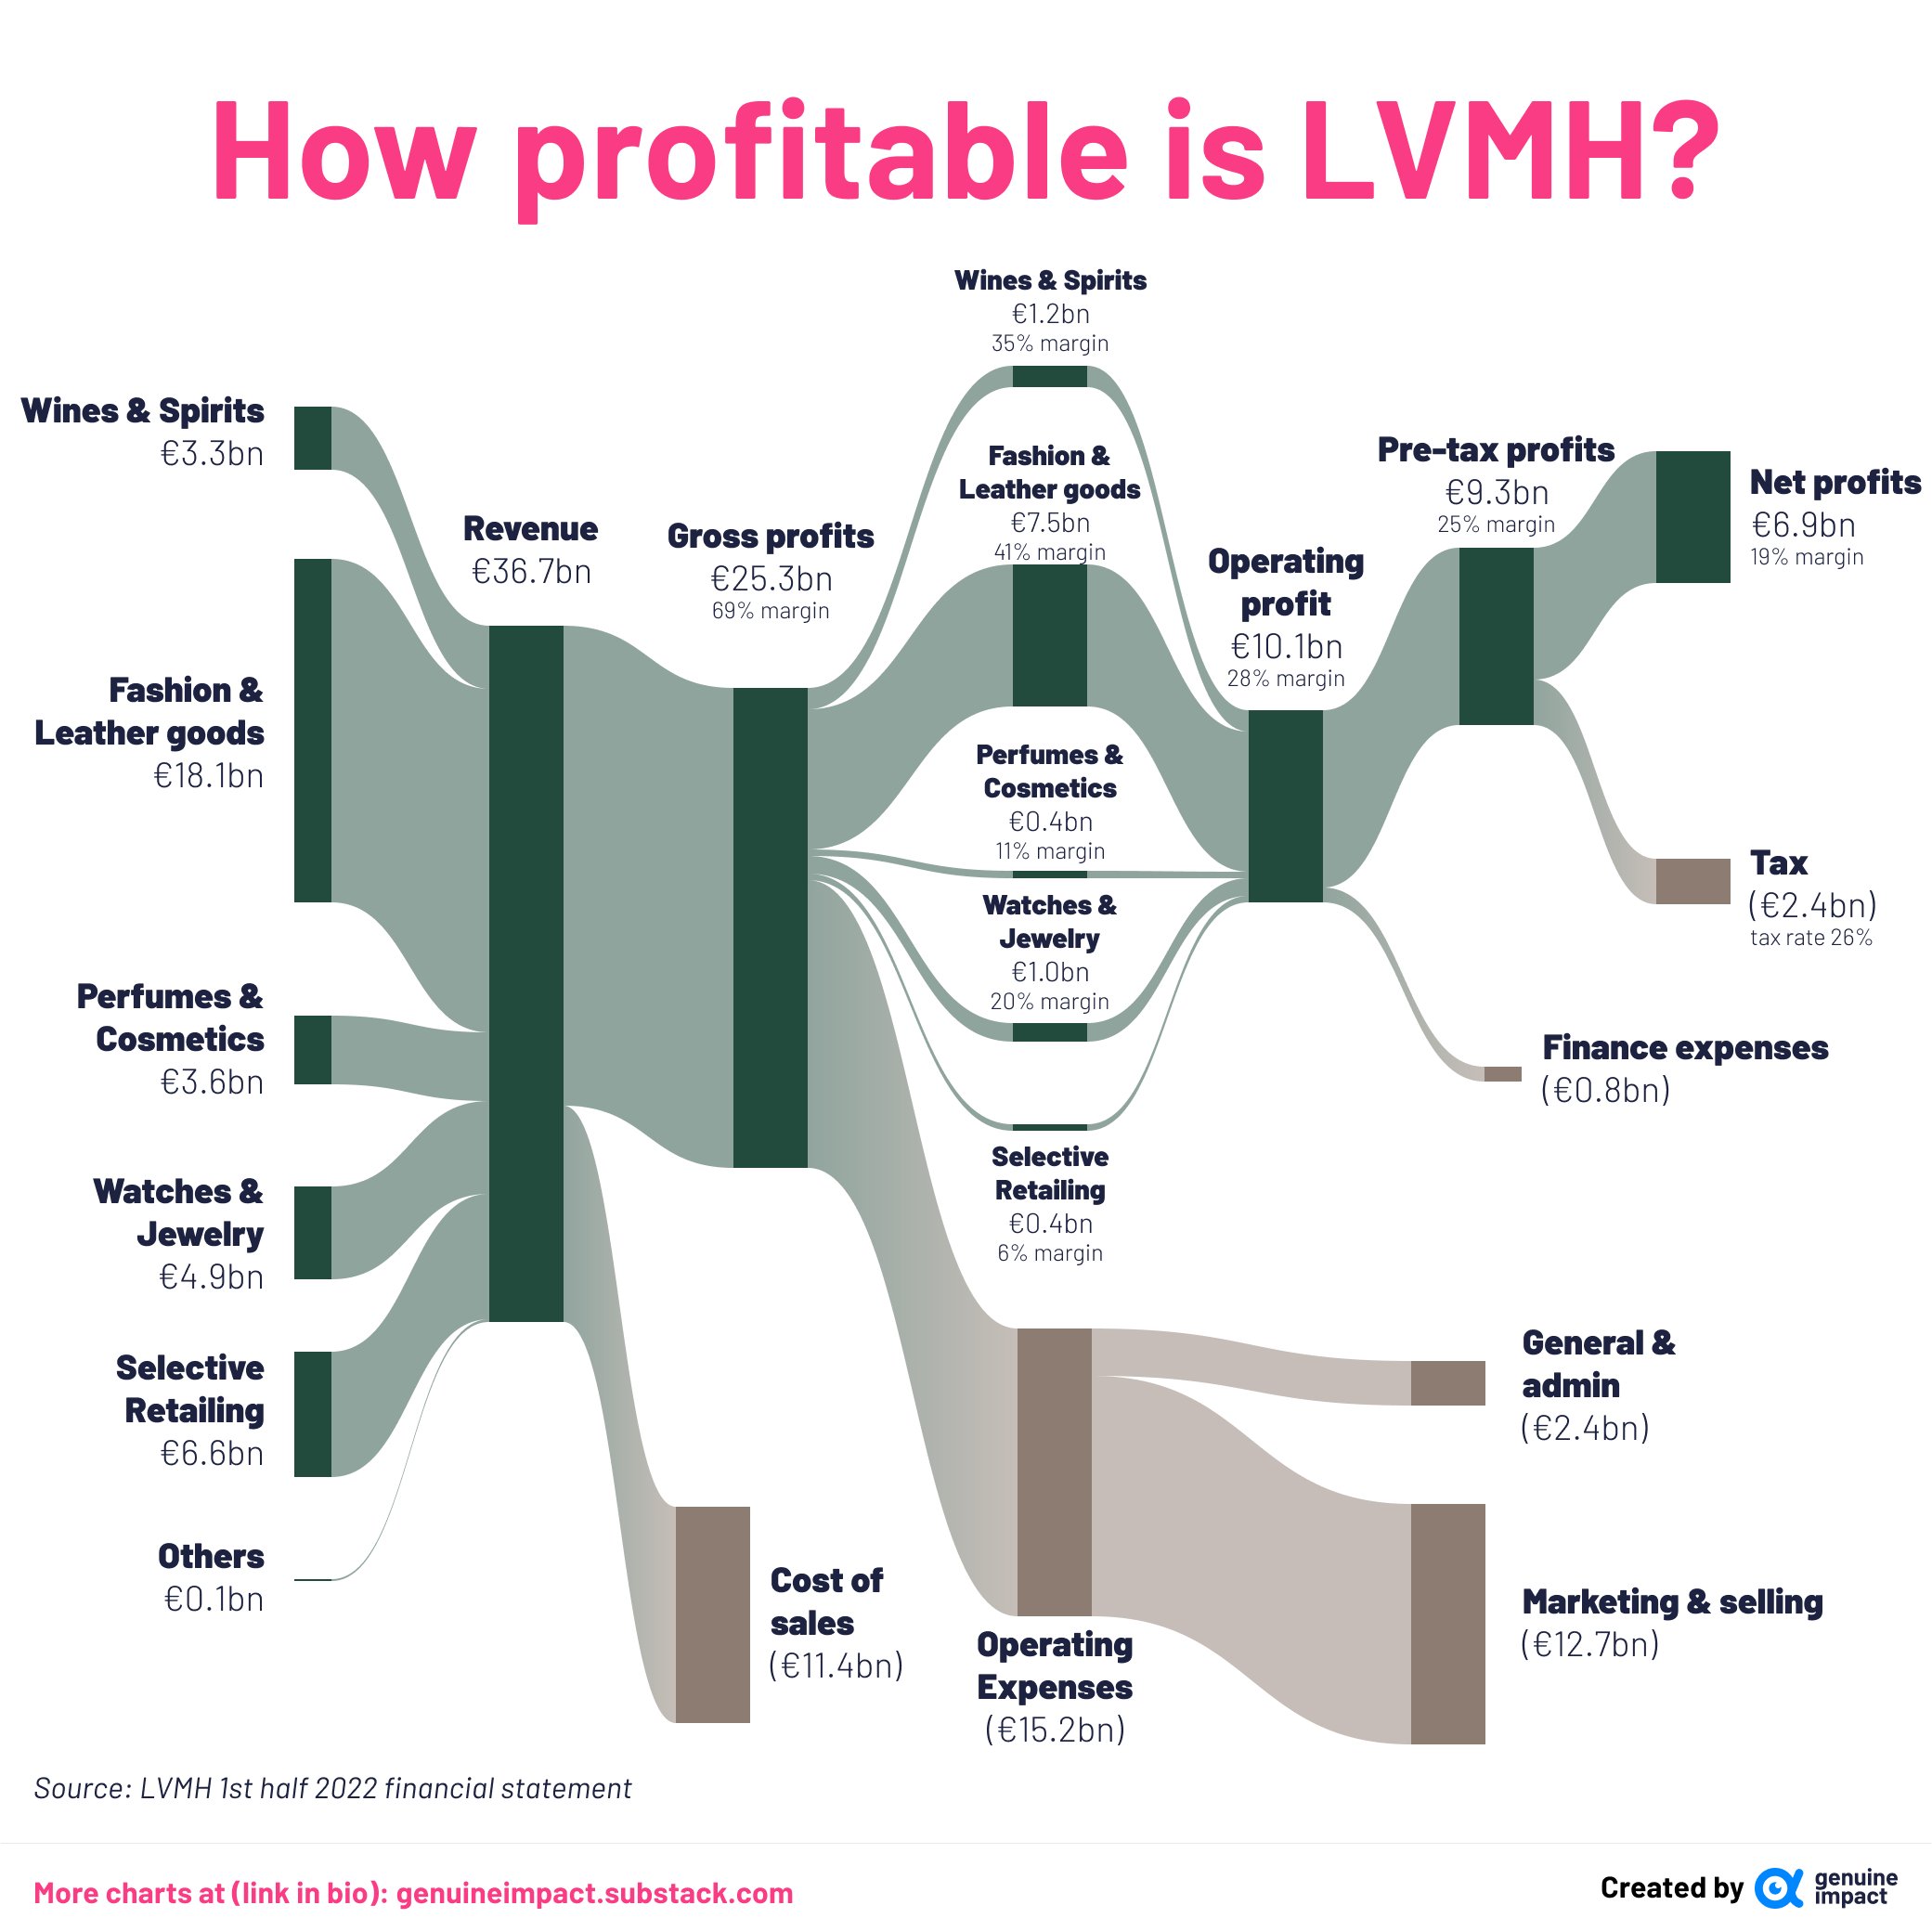 Genuine Impact on X: 4 most popular luxury stocks: LVMH, Kering